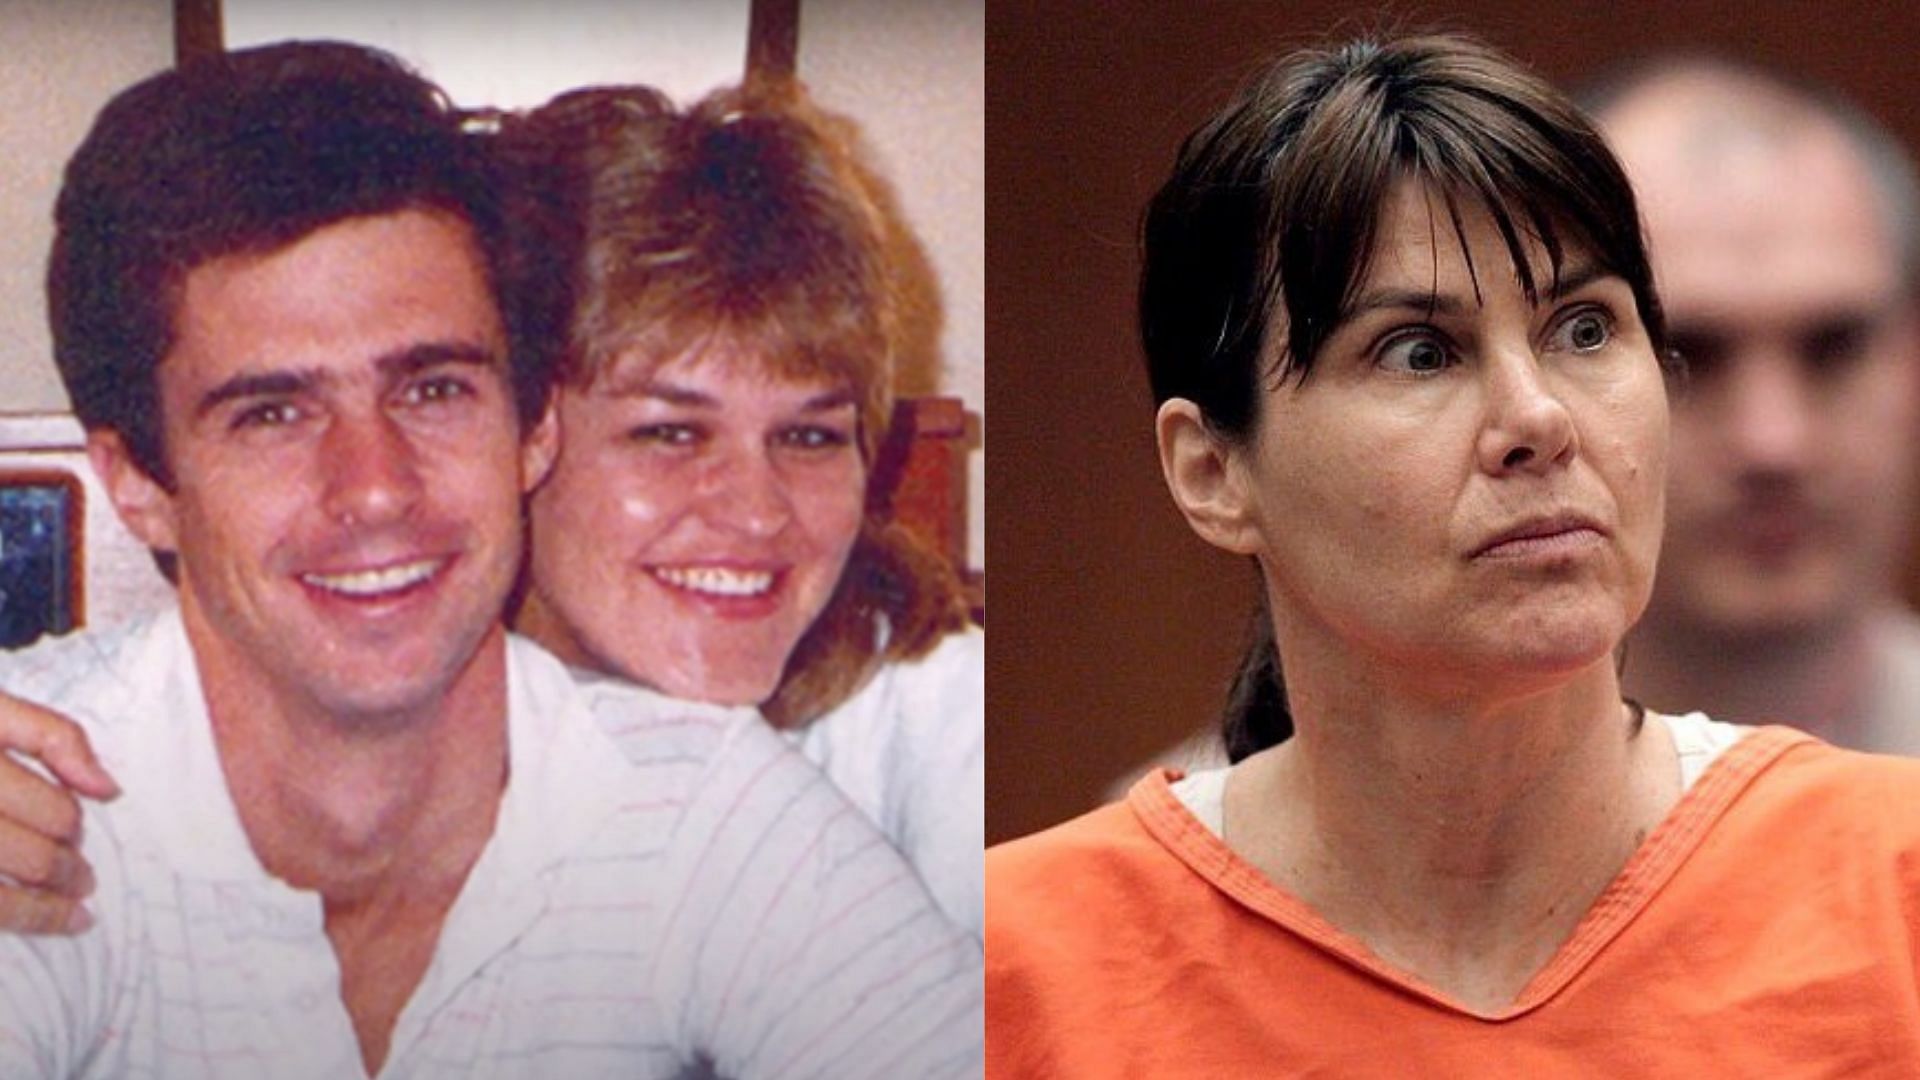 John Ruetten and Sherri Rasmussen before the brutal 1986 murder case, and Stephanie Lazarus during the murder trial in court (Image via Inside Edition/YouTube, @MyFavMurder/Twitter)